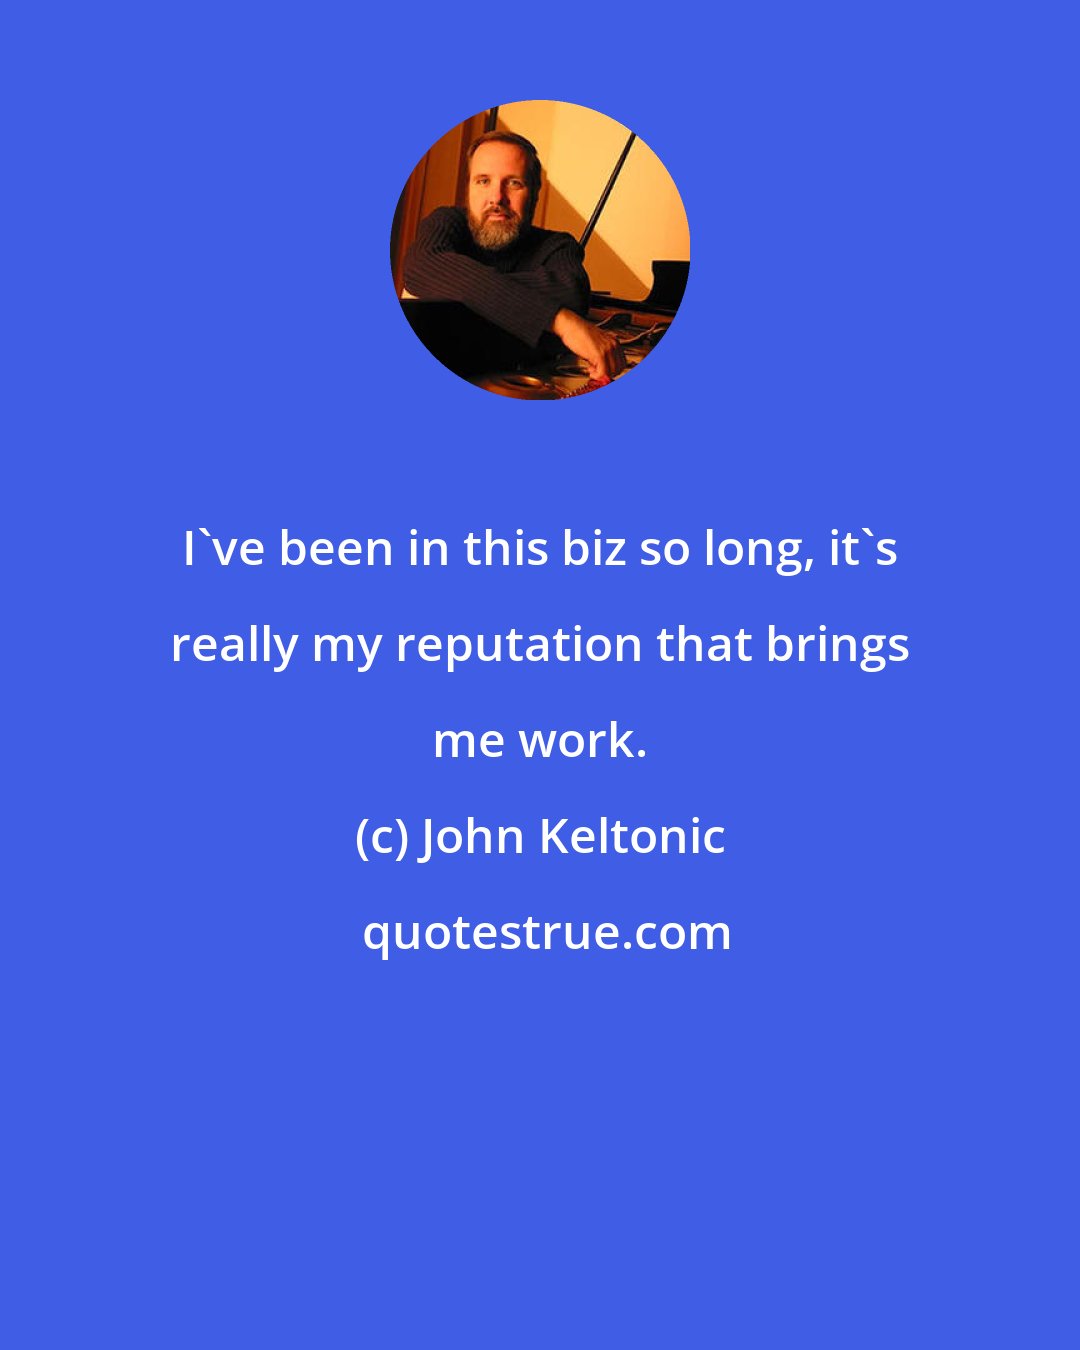 John Keltonic: I've been in this biz so long, it's really my reputation that brings me work.